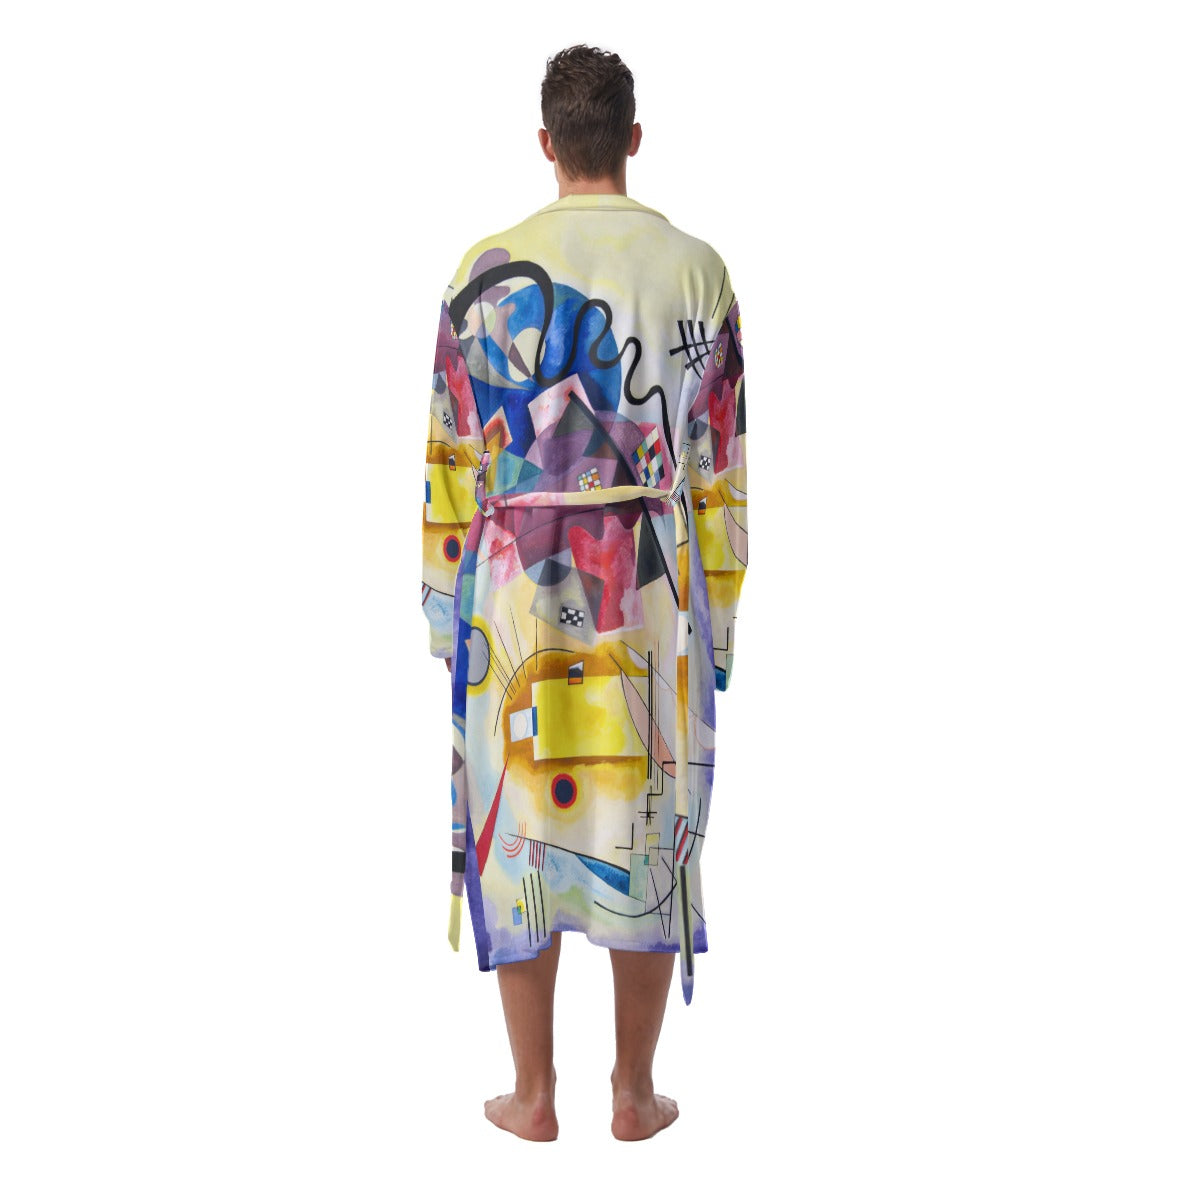 Colorful Abstract Design Heavy Fleece Robe for Men